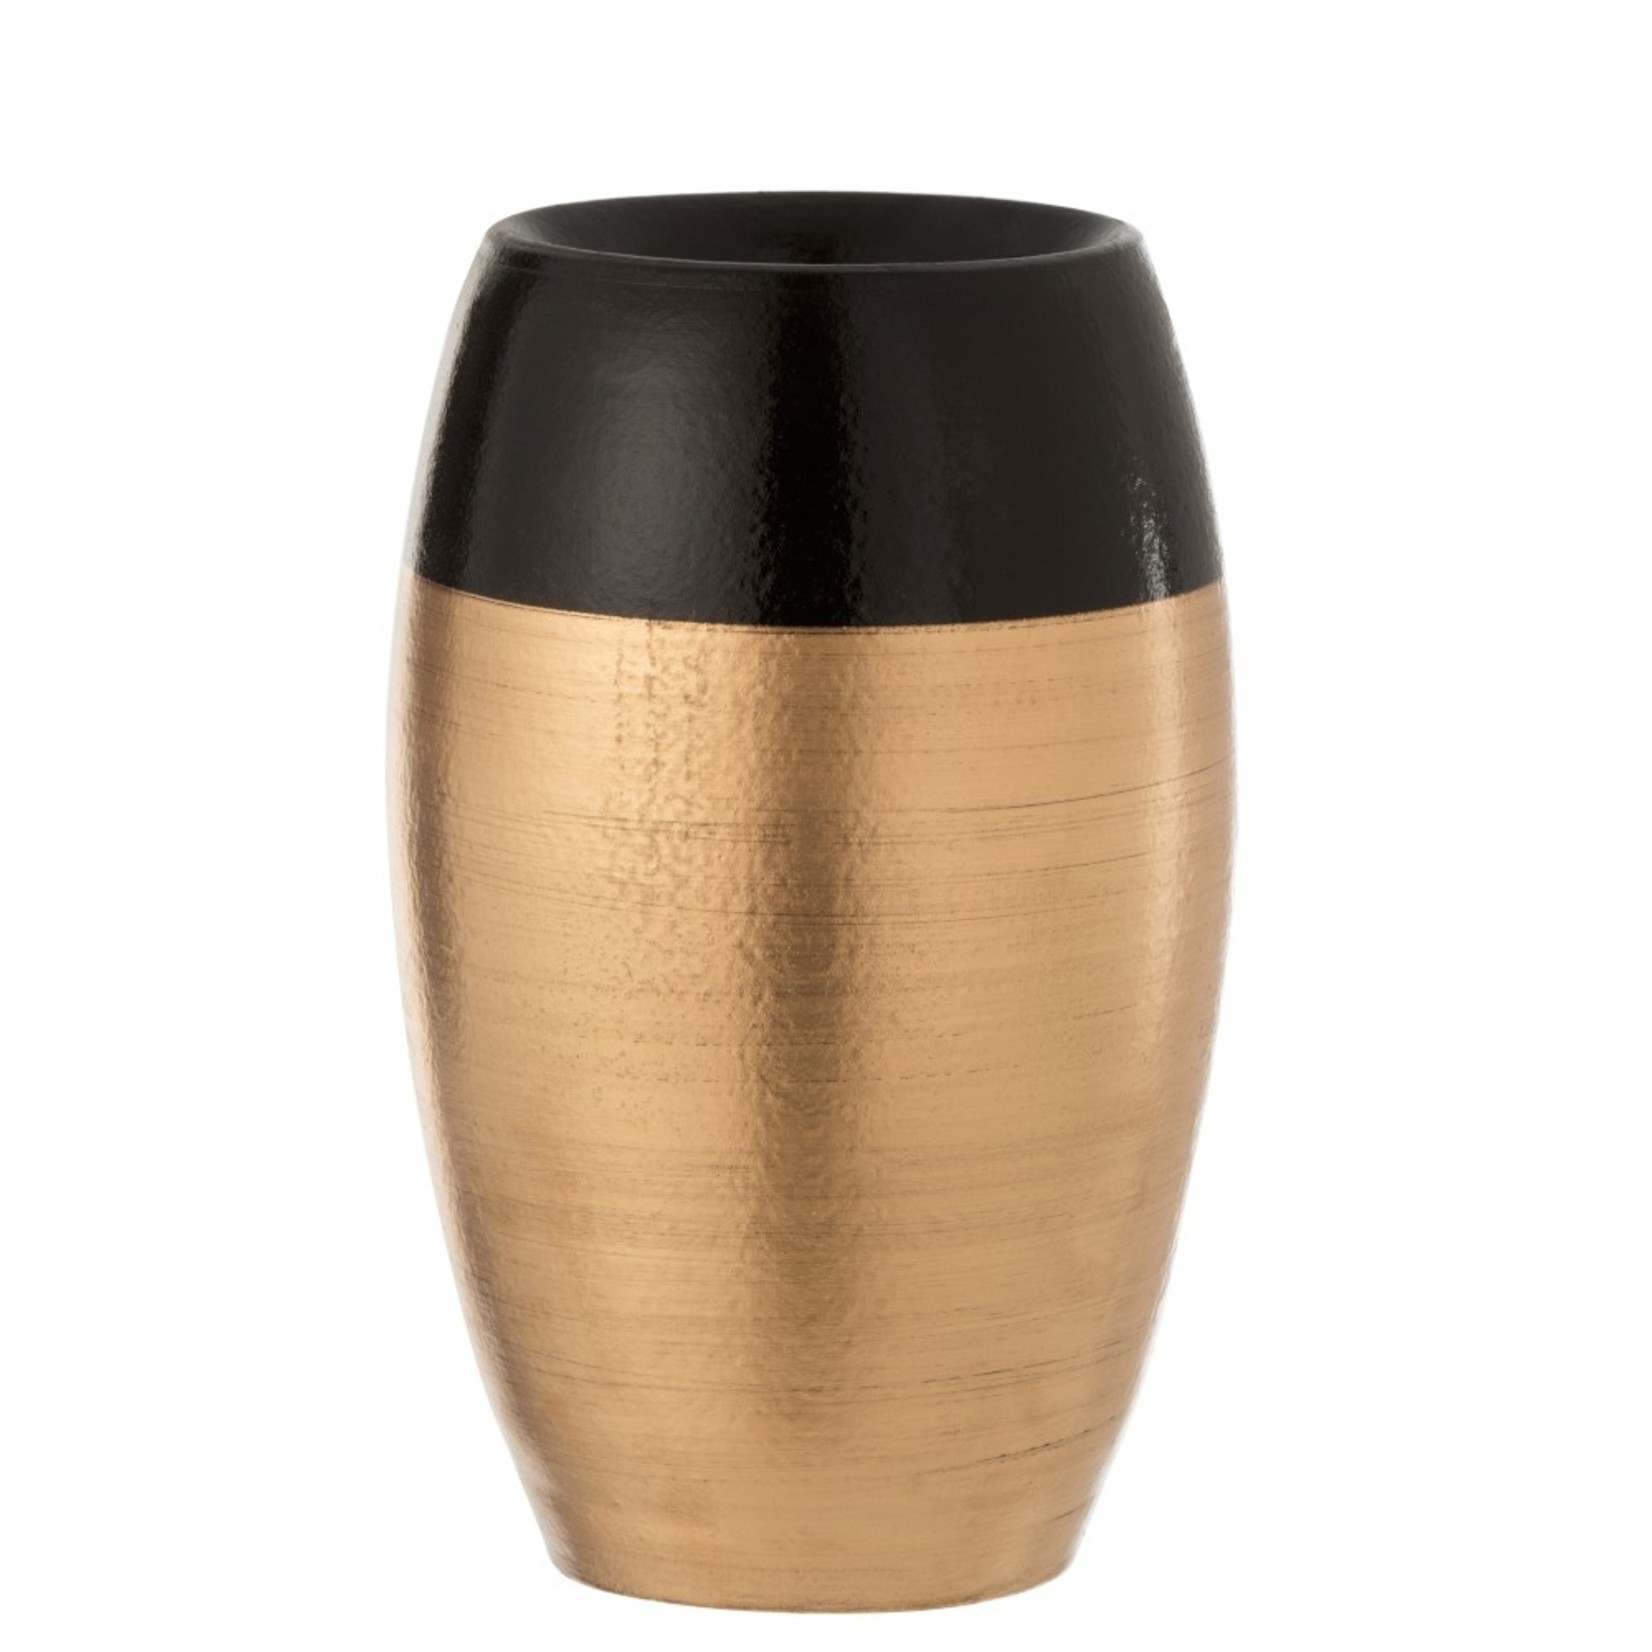 J-Line Vase Terracotta Border Black Gold - Large